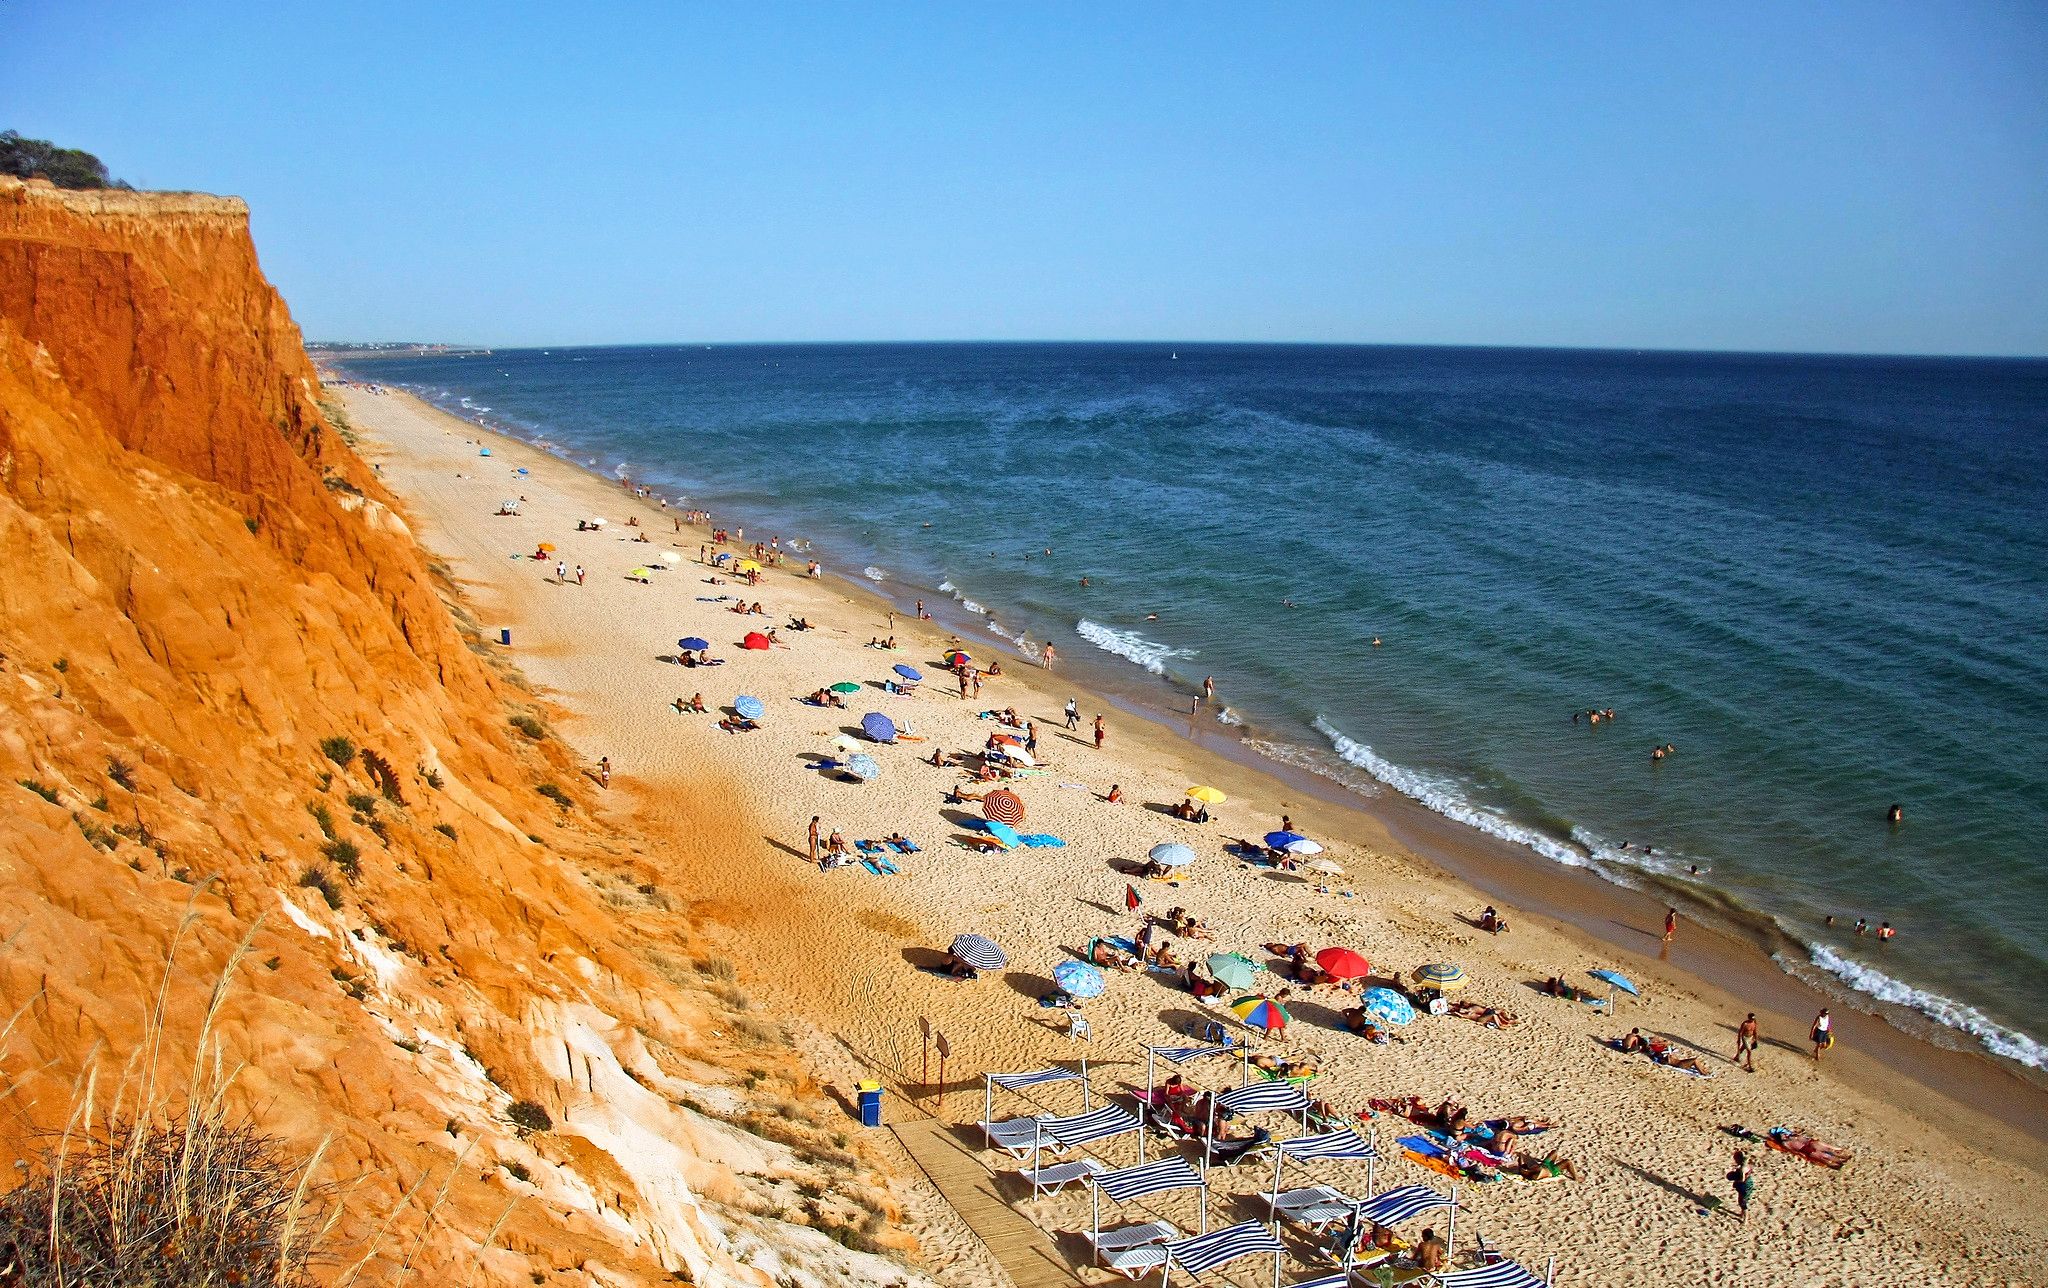 Praia da Felesia, Portugal - No. 1 in the Best of the Best Beaches of Europe